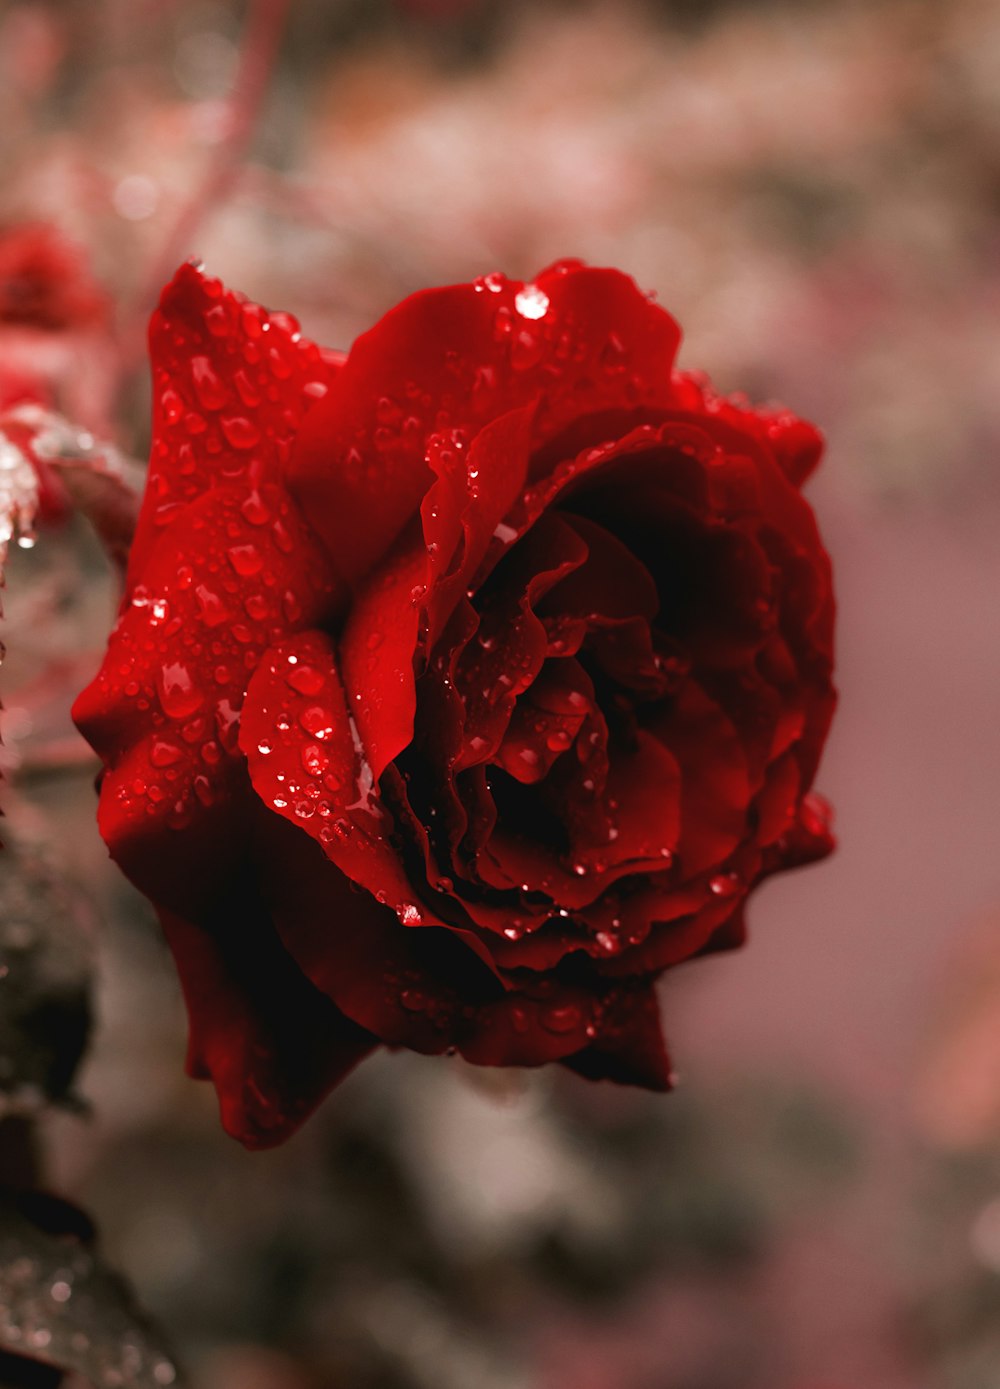 Astonishing Assortment of Full 4K Rose Flower Images – Over 999 Exquisite Shots